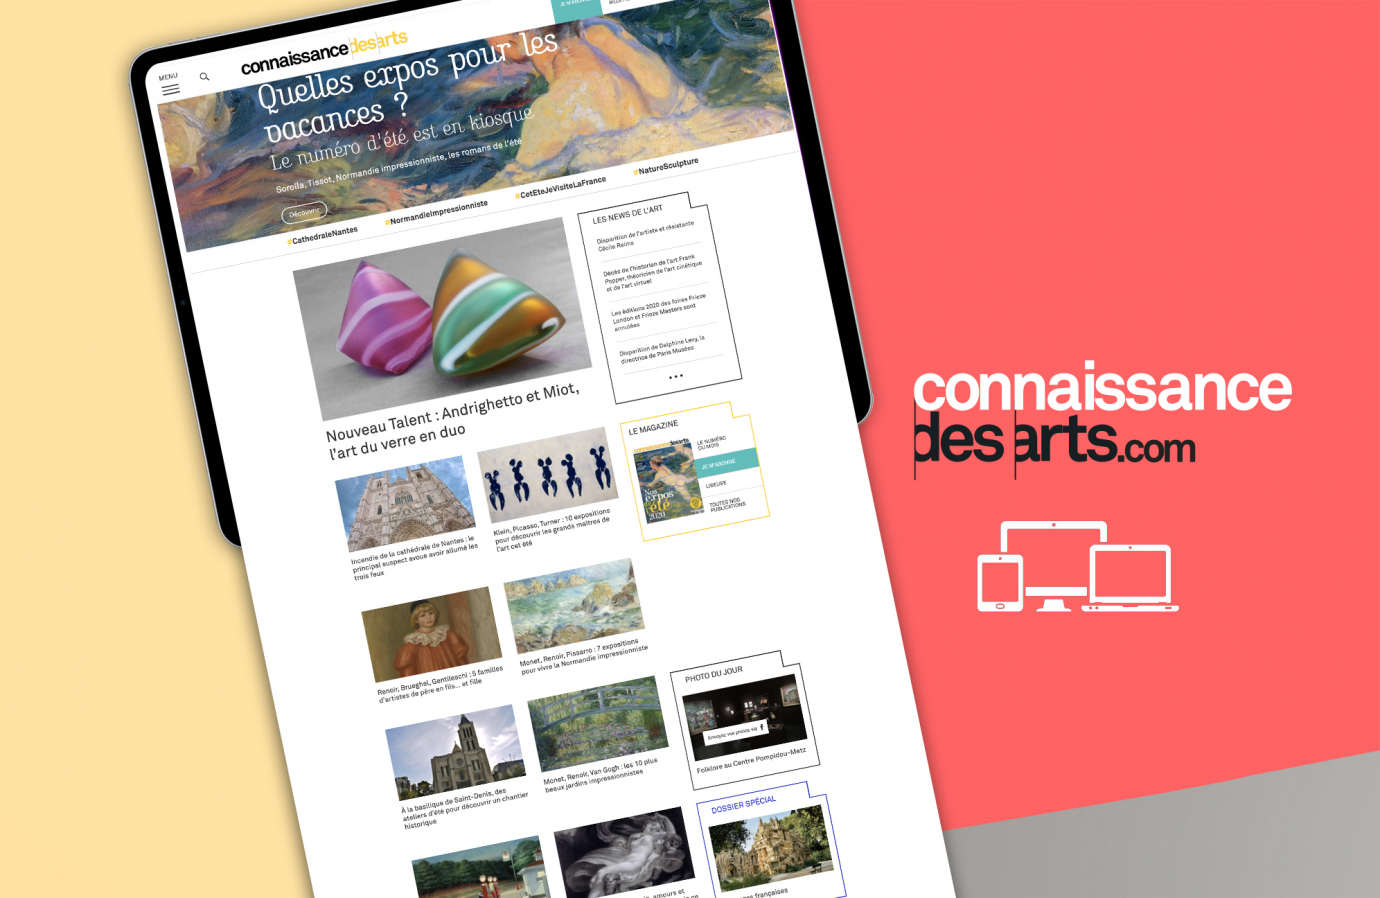 Connaissance des Arts, leading arts magazine - Other activities - LVMH